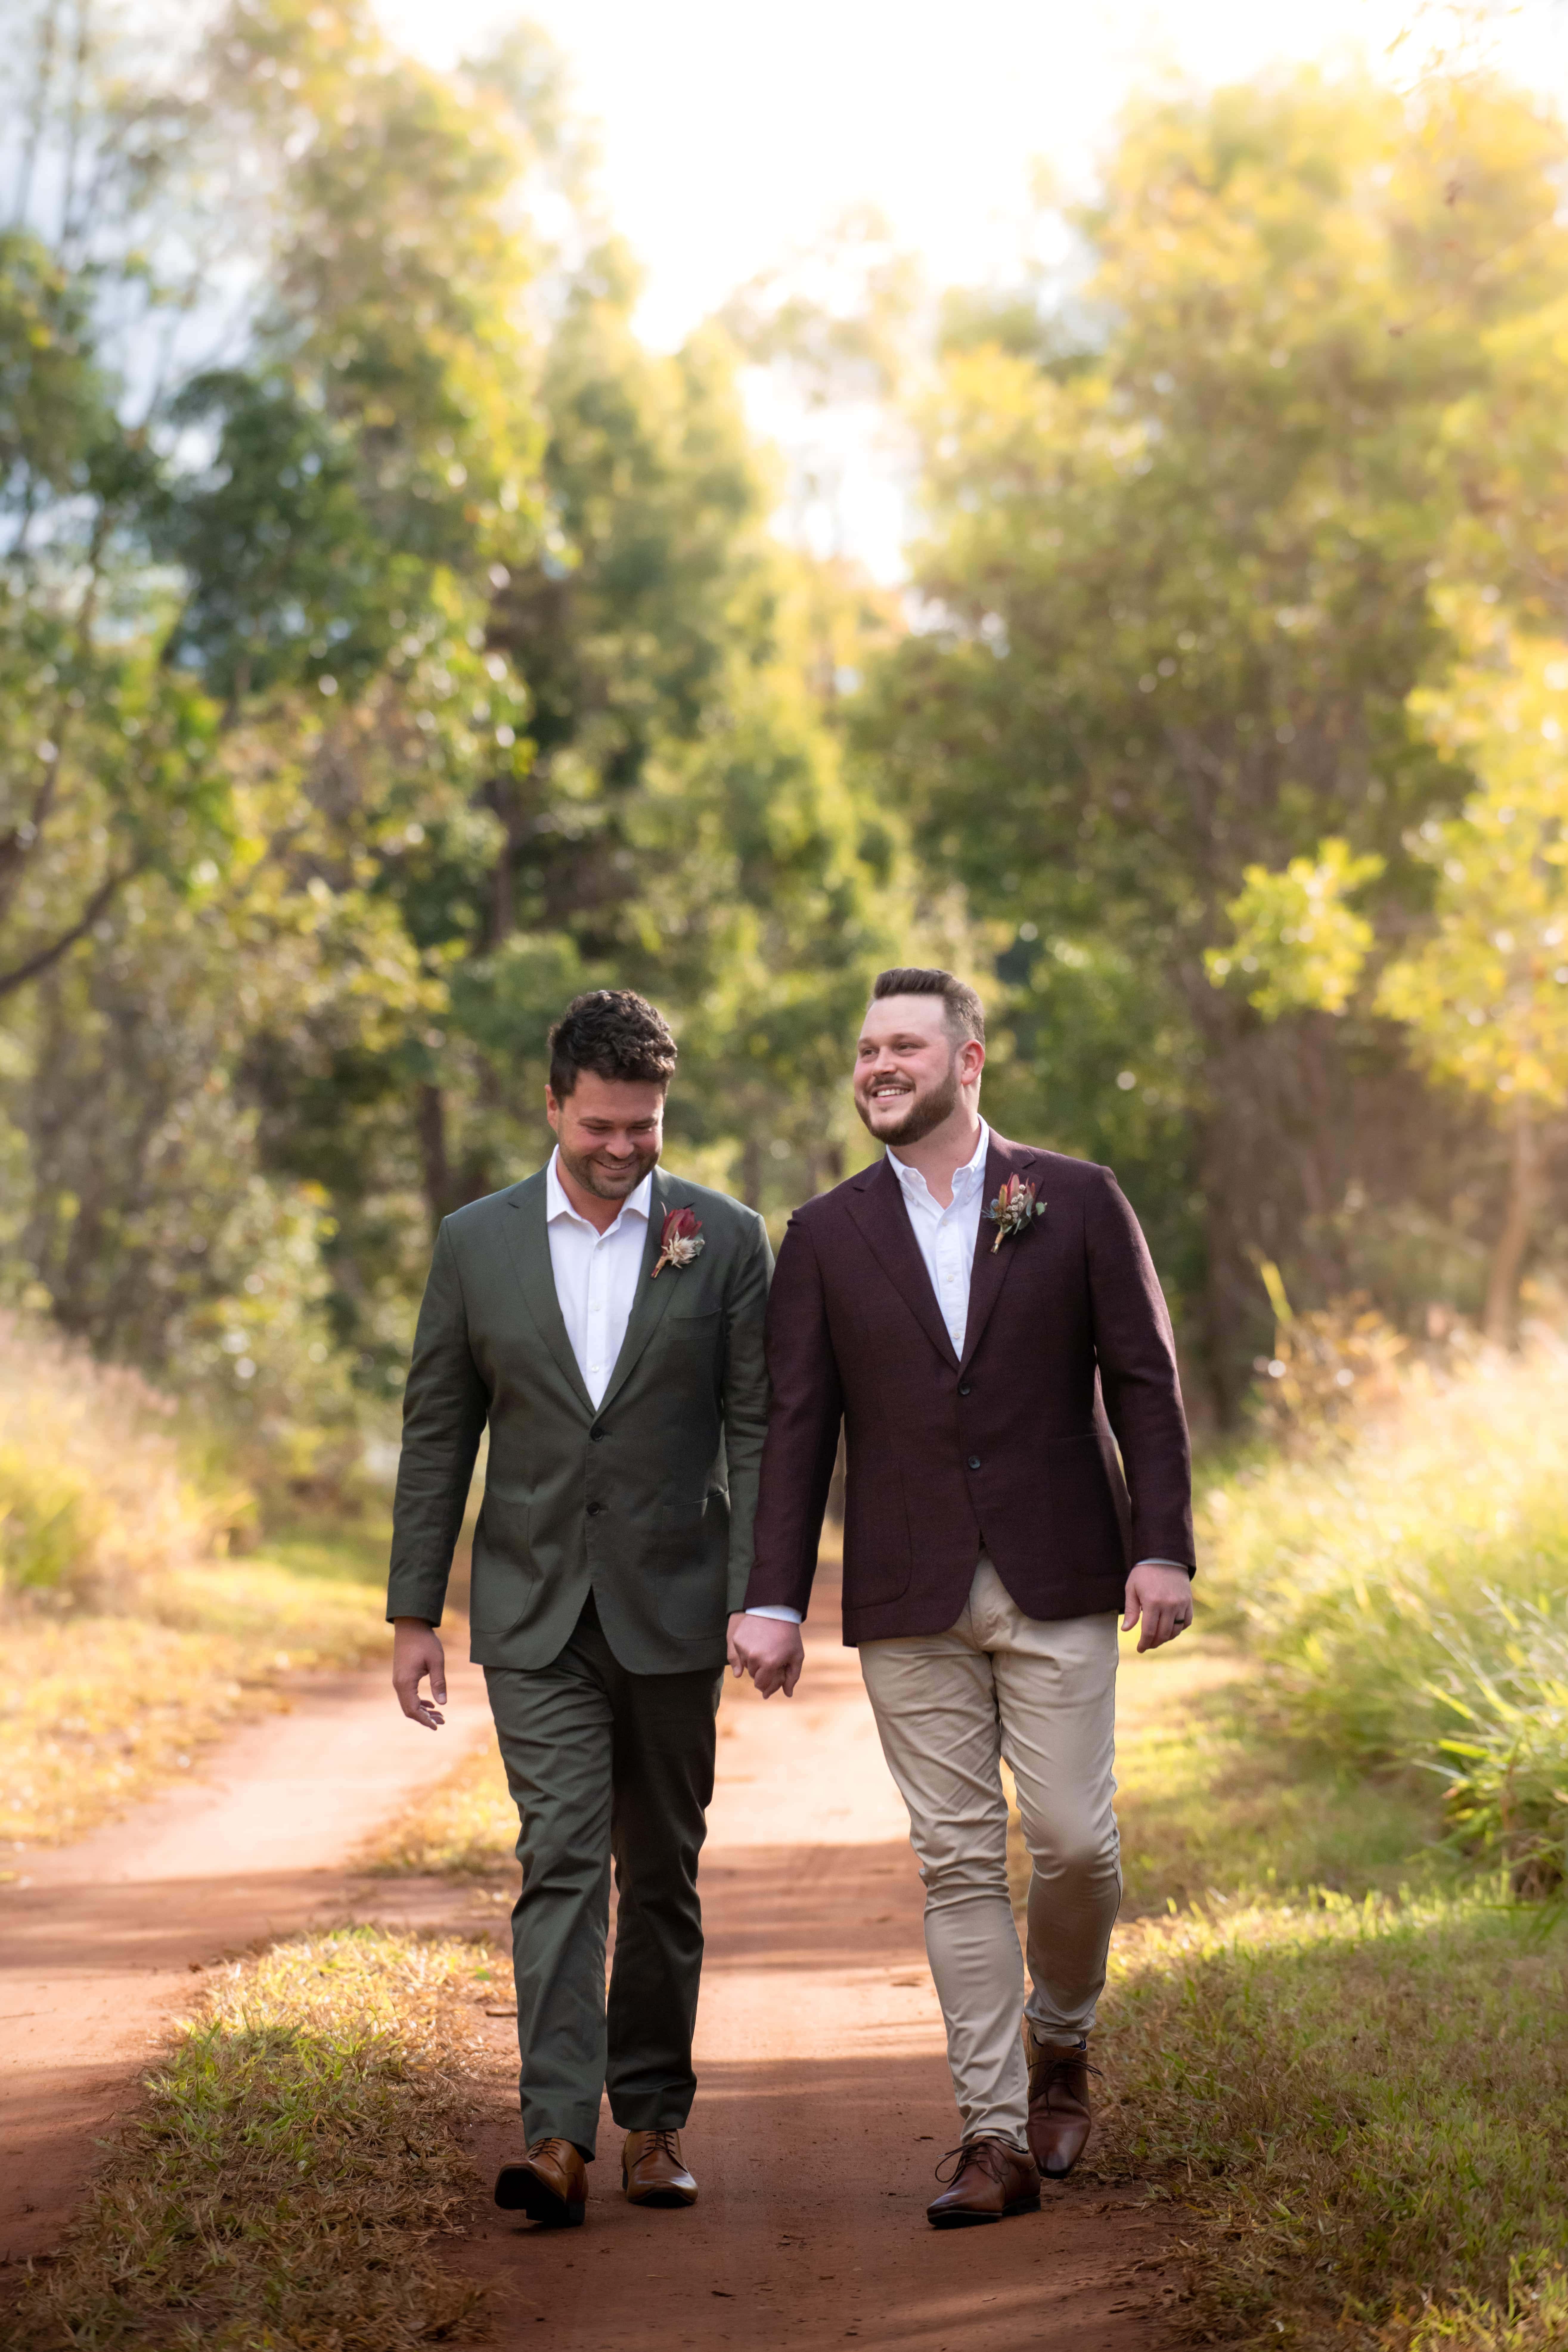 Real-wedding-Luke-and-Mitch-at-The-Crocodile-Lodge-Australia-Zoo-Queensland-couple-walking